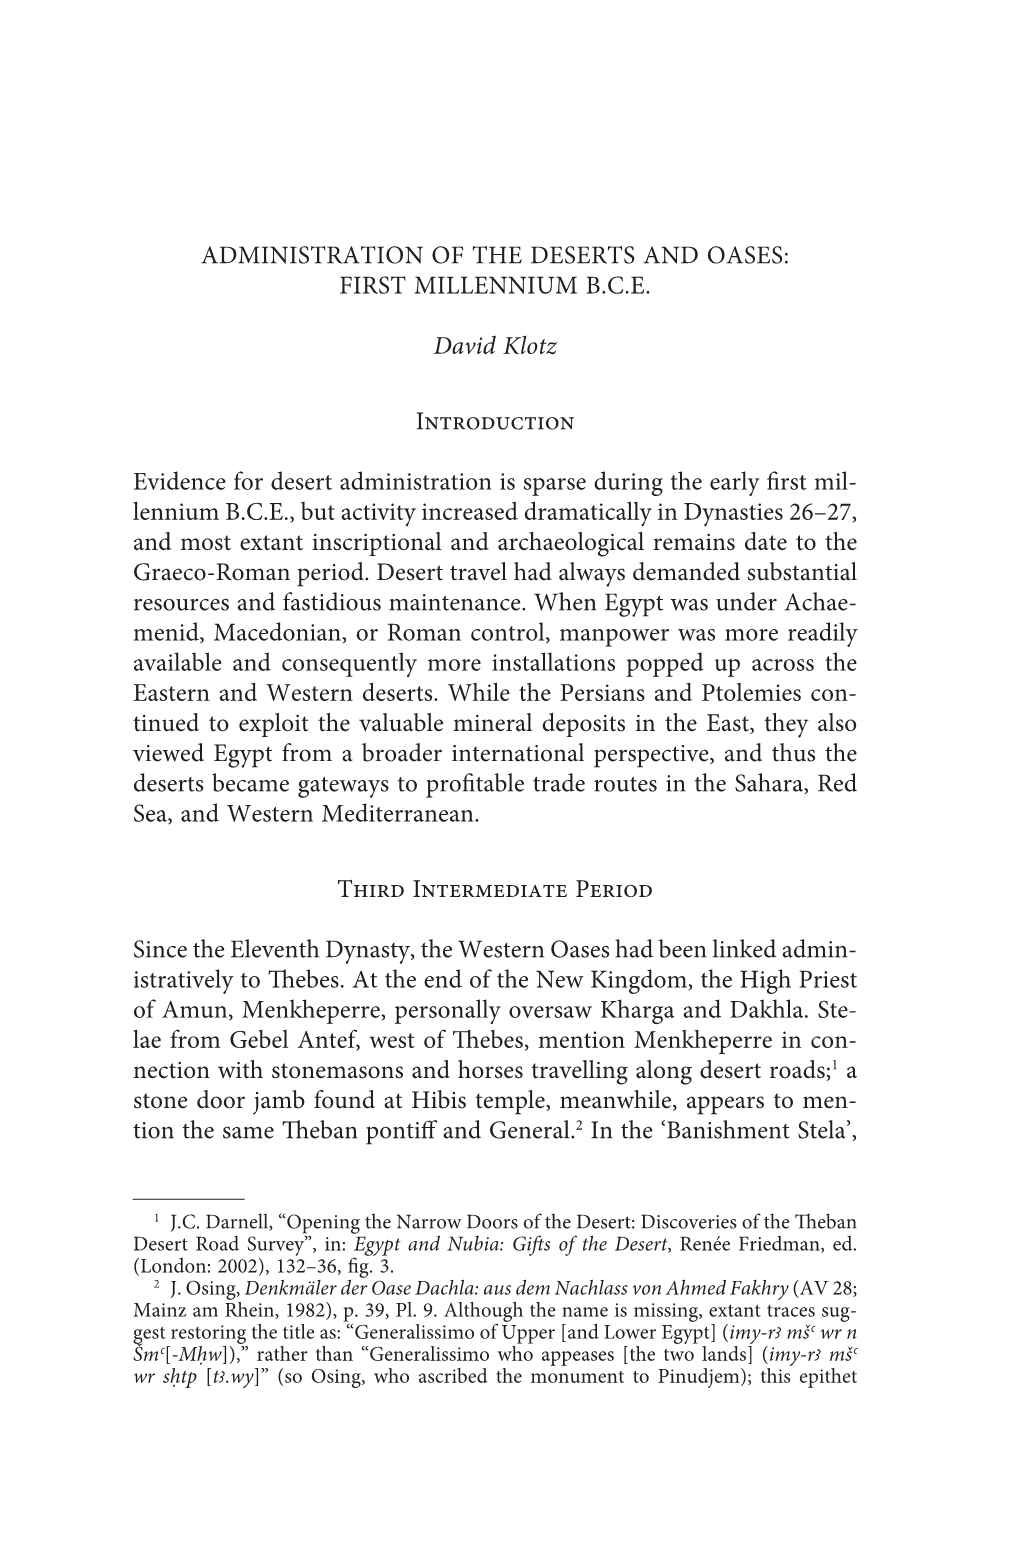 First Millennium Bce David Klotz Introduction Evidence For